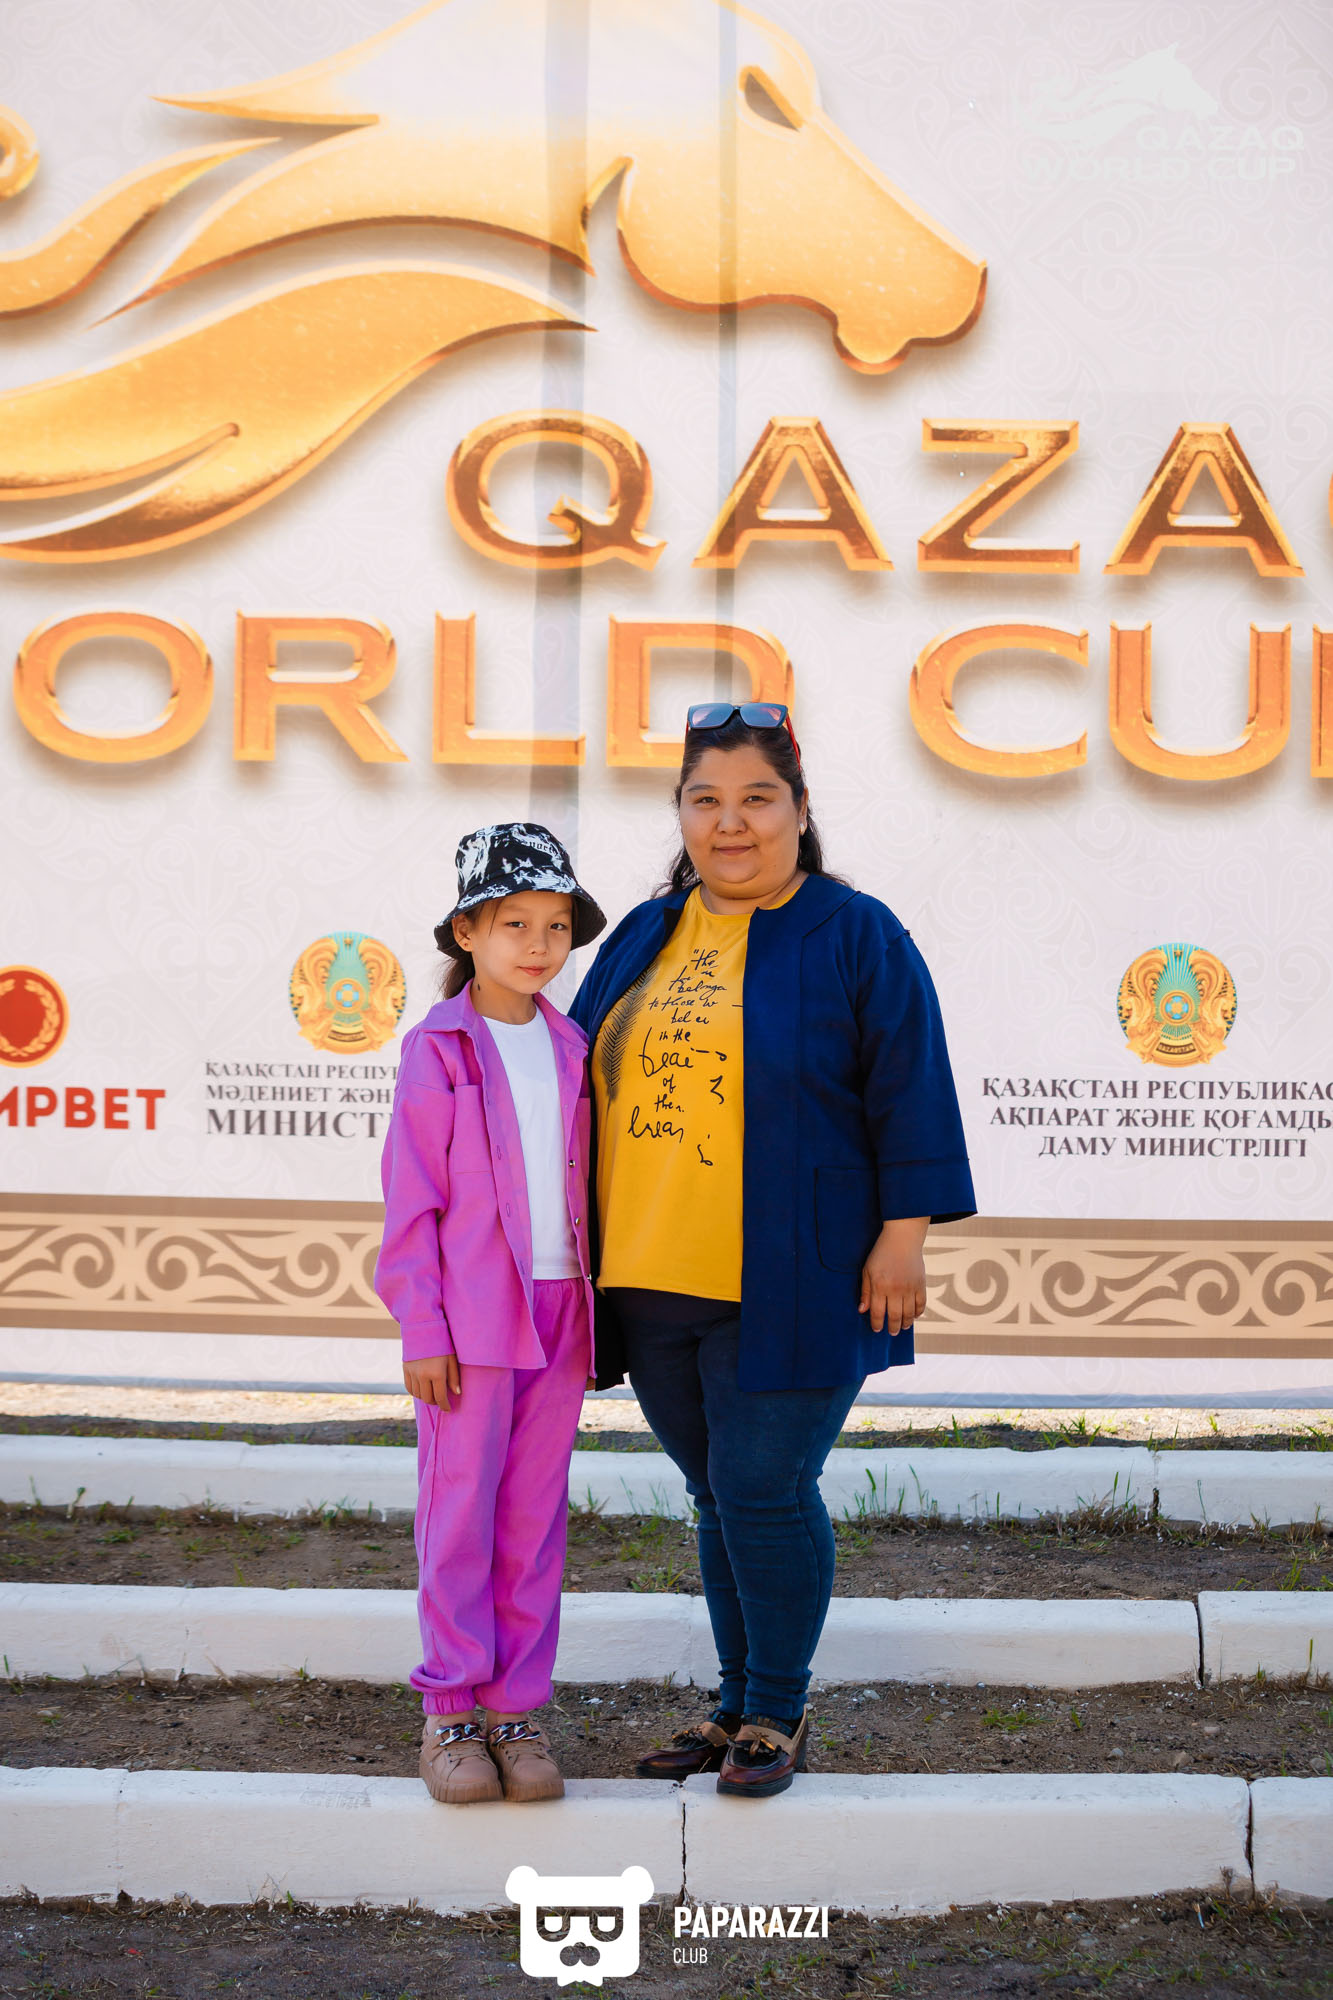 Qazaq World Cup